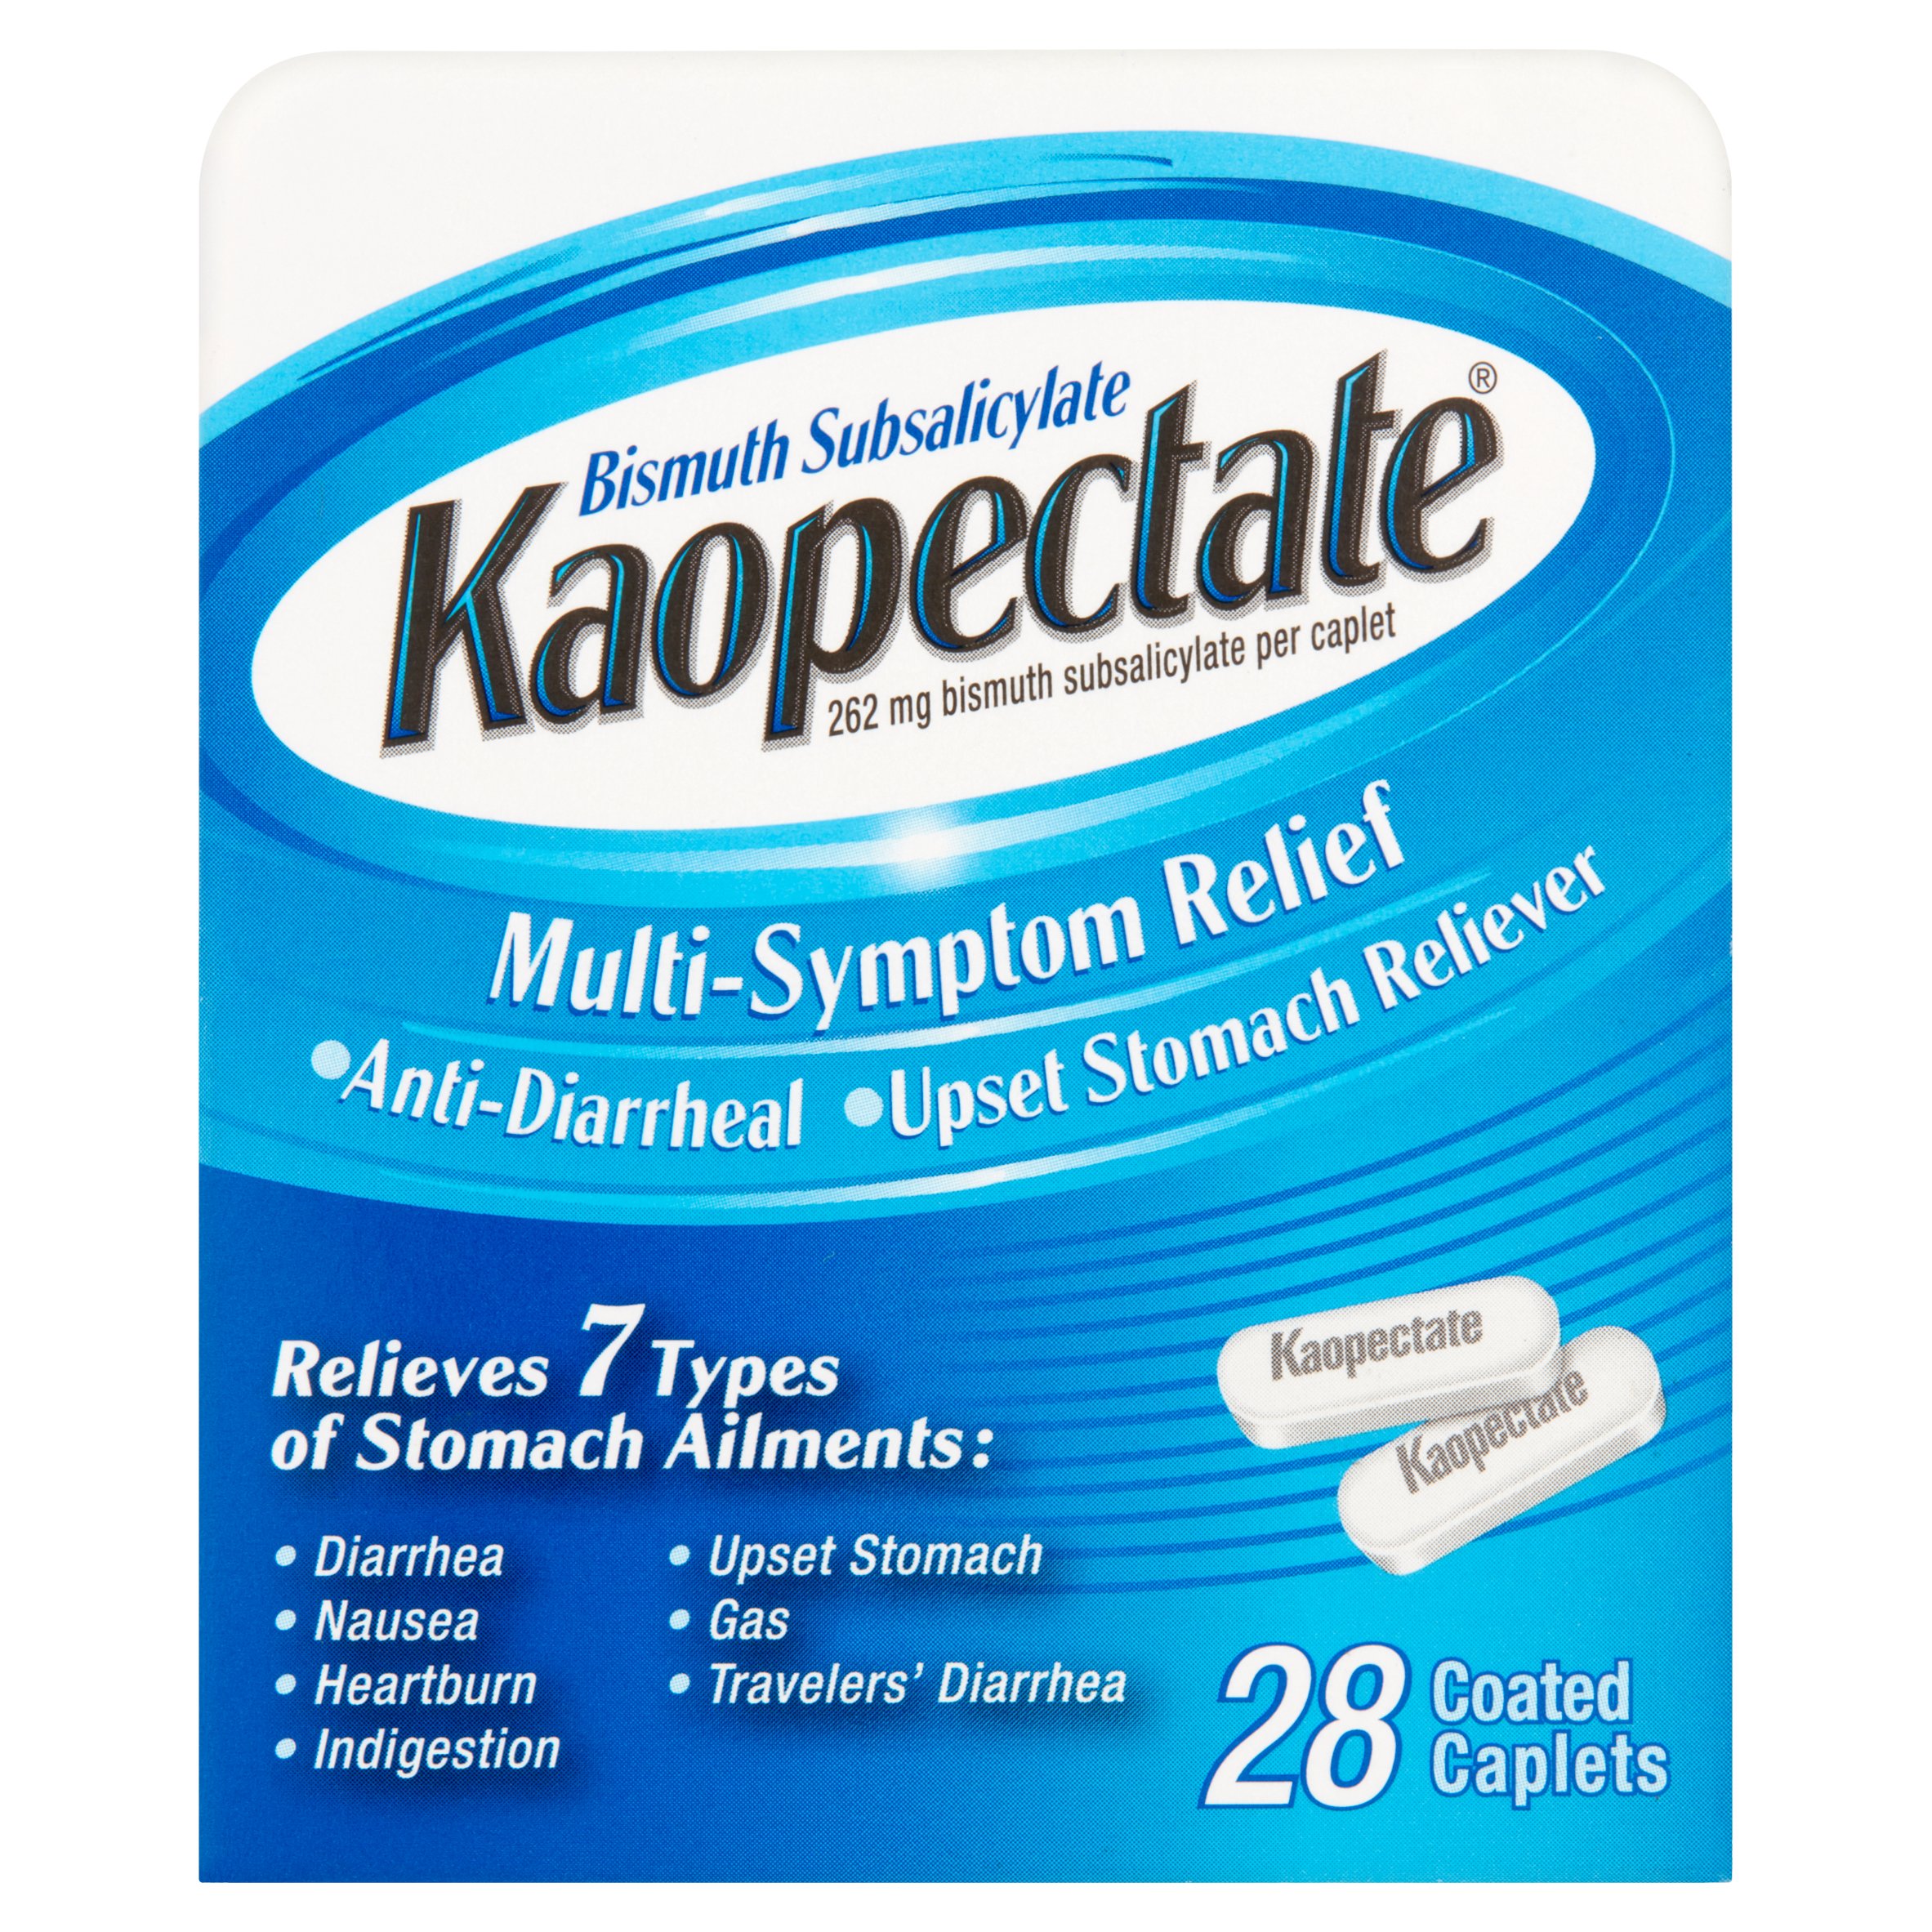 Kaopectate Multi-Symptom Relief Caplets, 28 Count - image 1 of 6